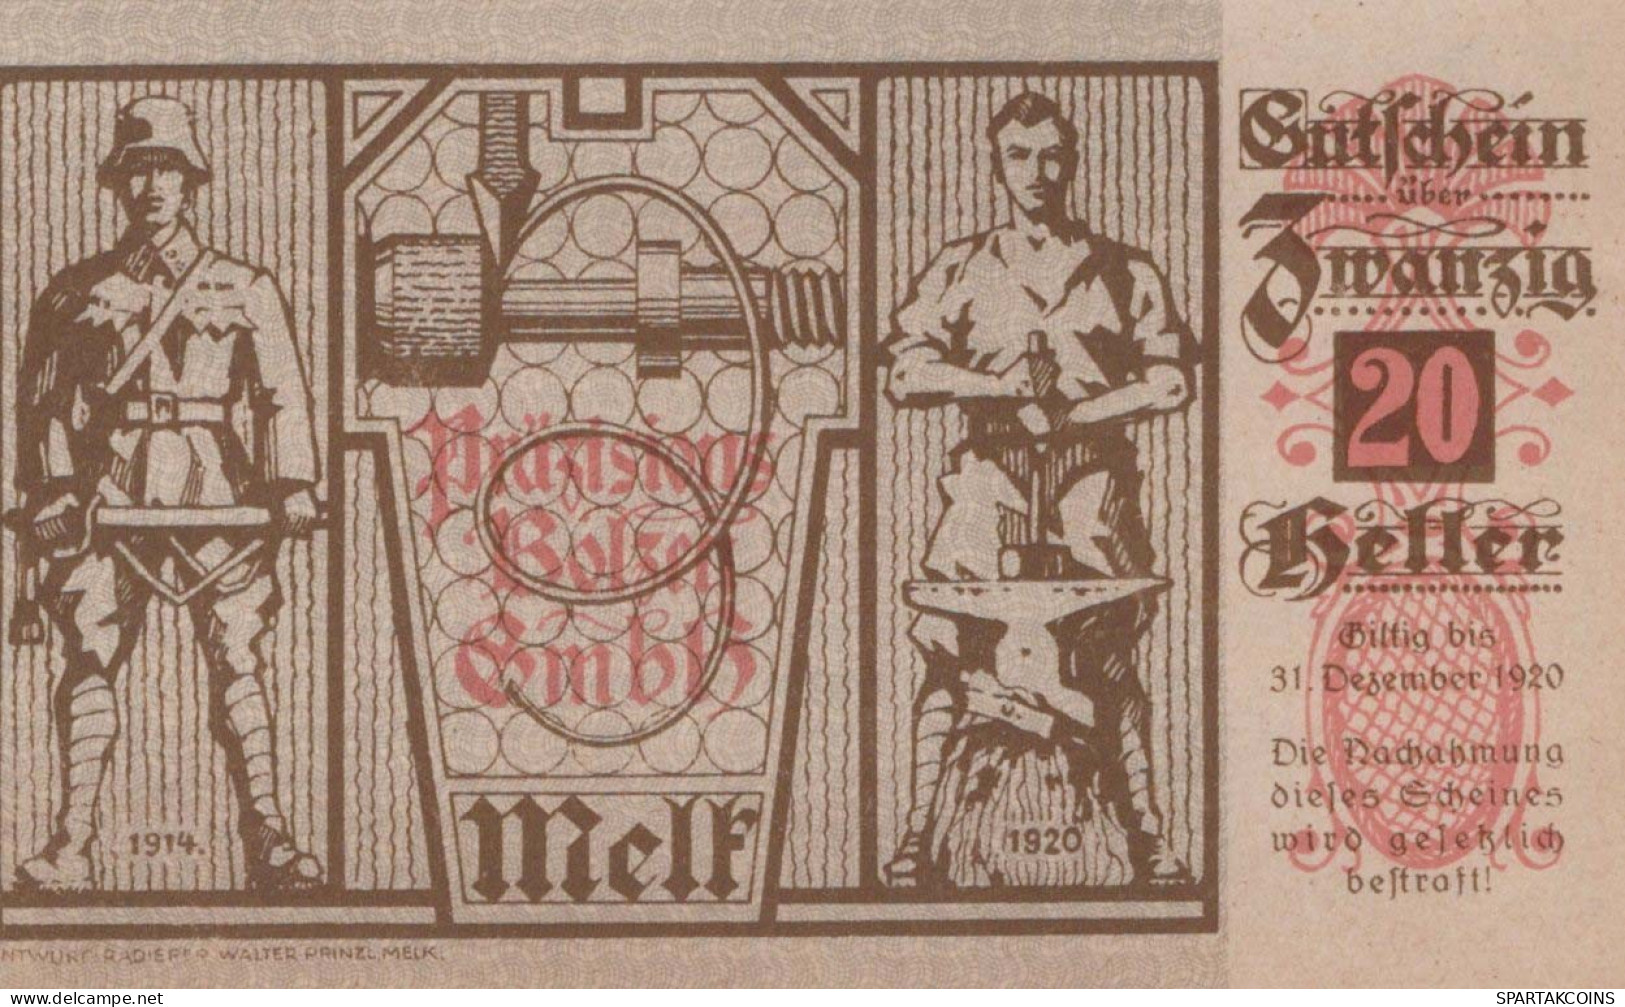 20 HELLER 1920 Stadt MELK Niedrigeren Österreich Notgeld Banknote #PD860 - [11] Emisiones Locales